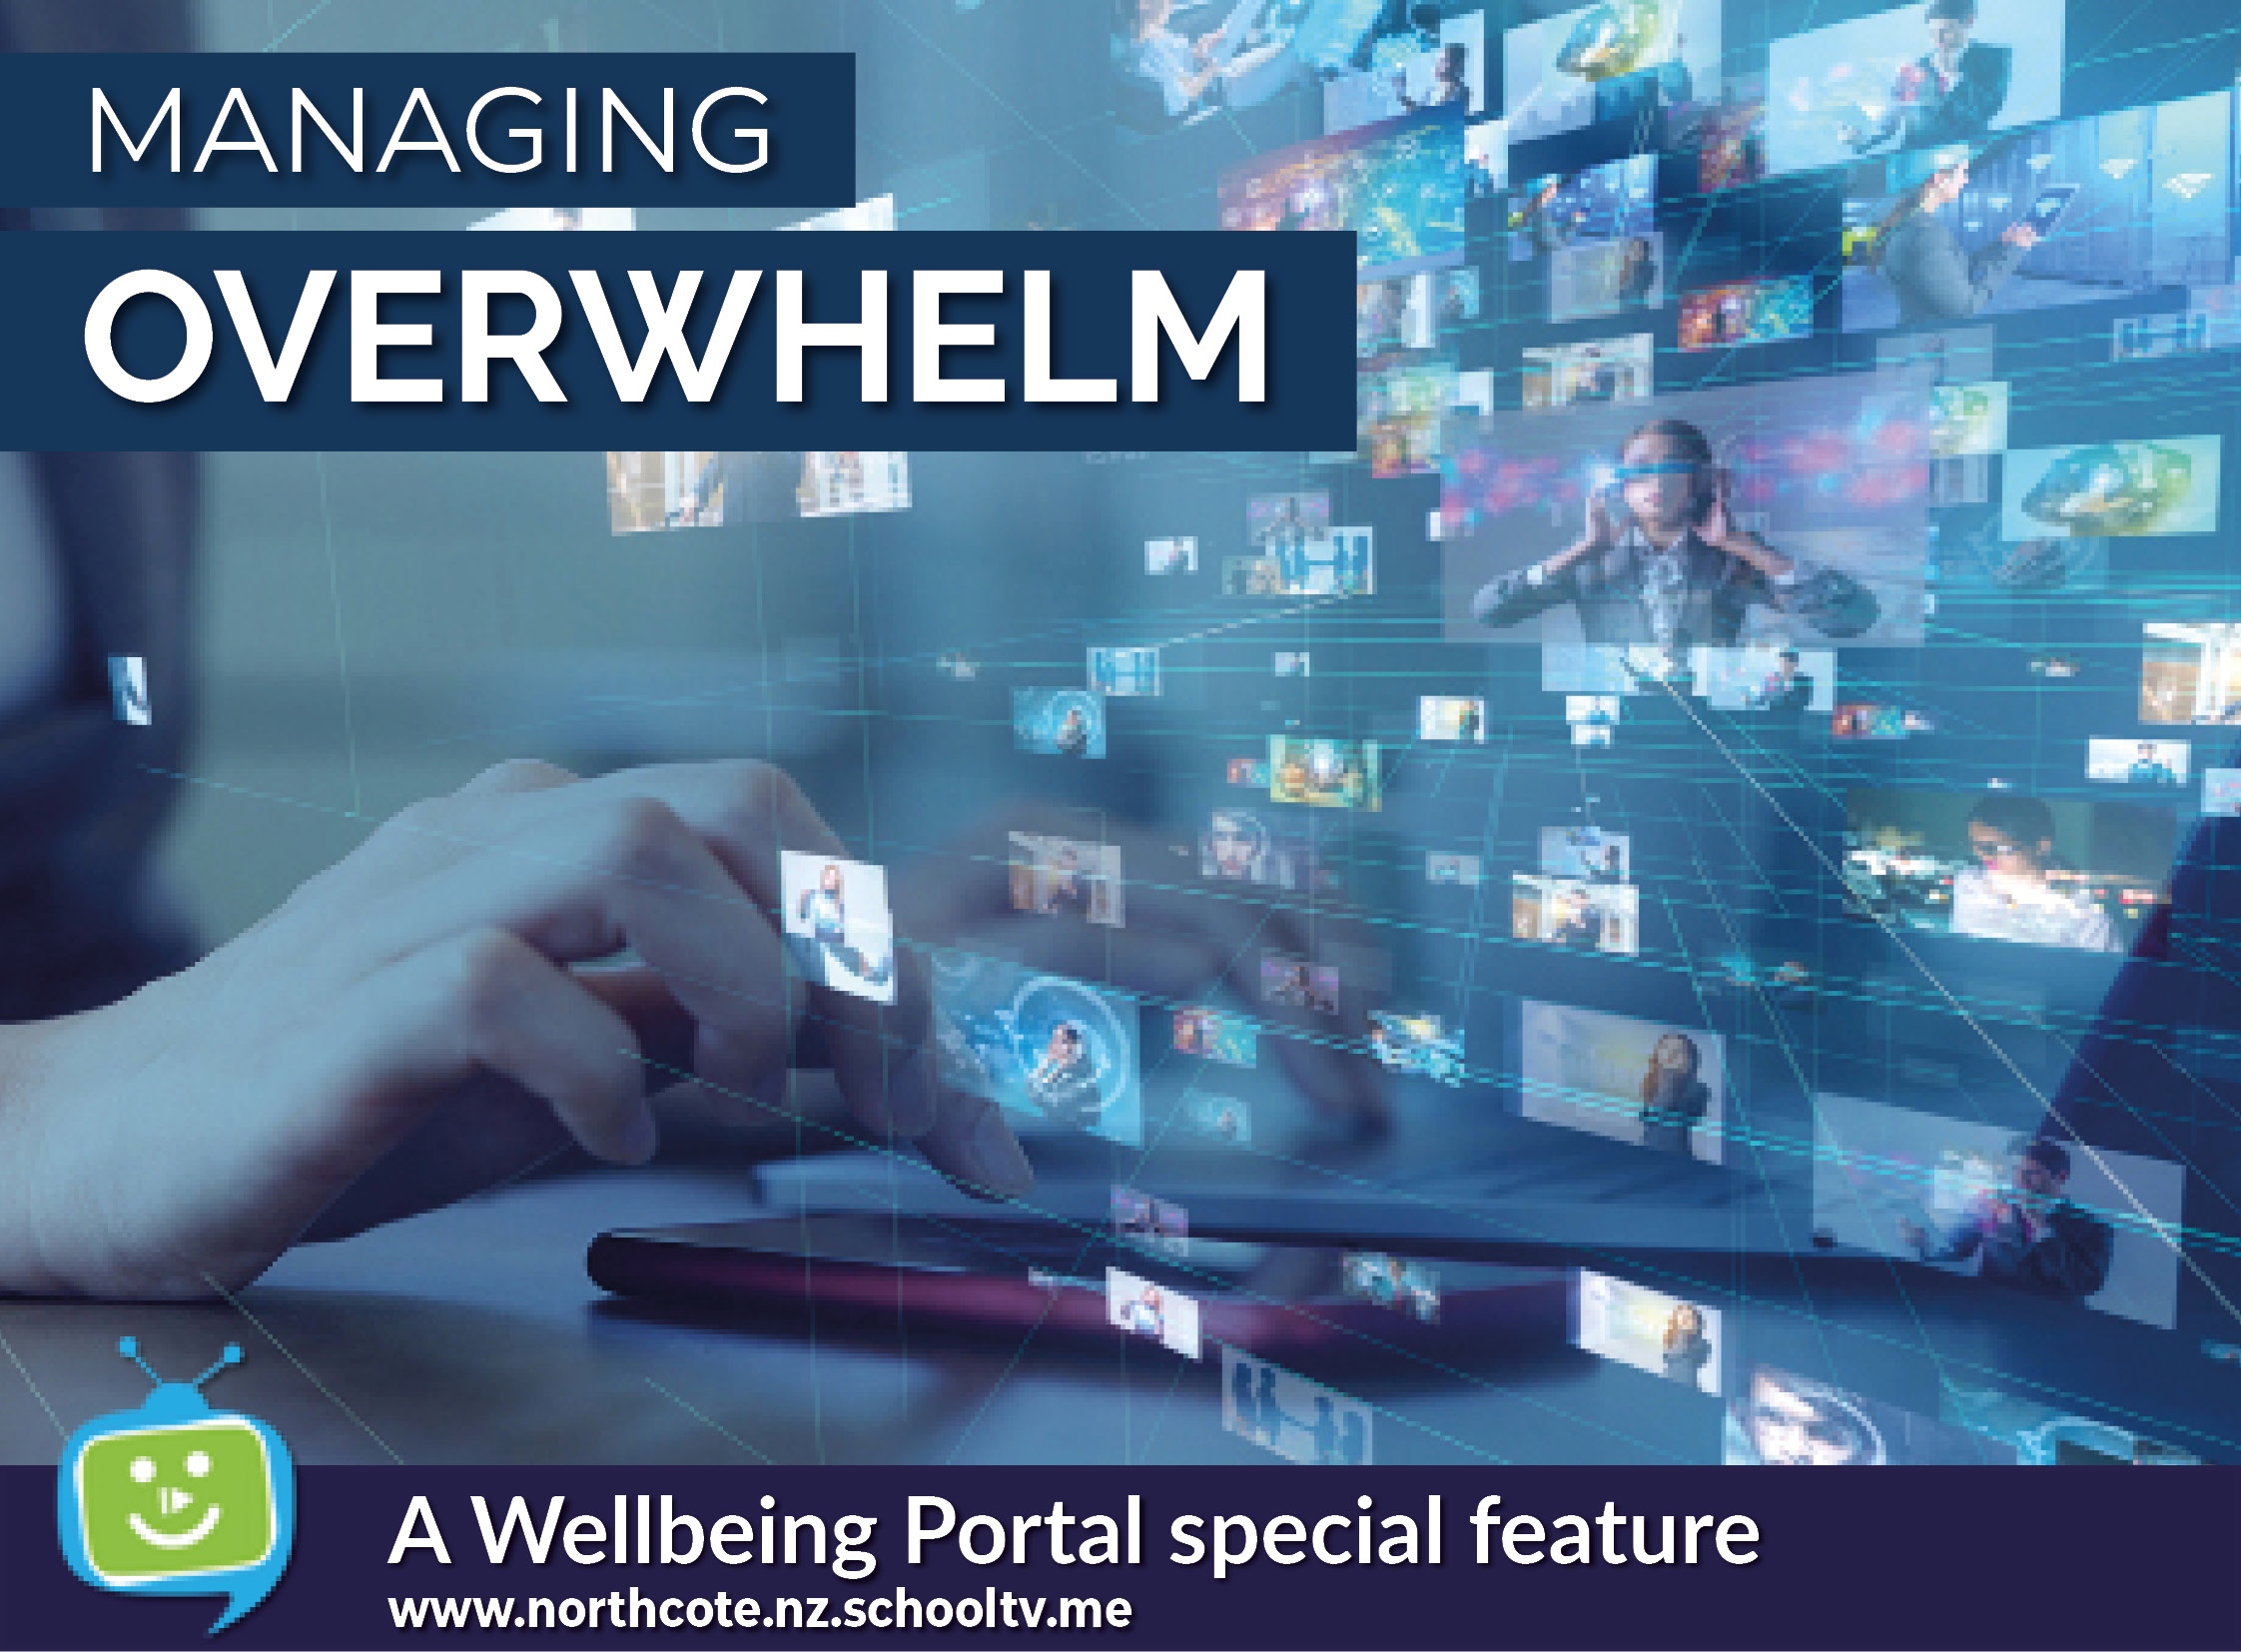 wellbeing portal - managing overwhelm